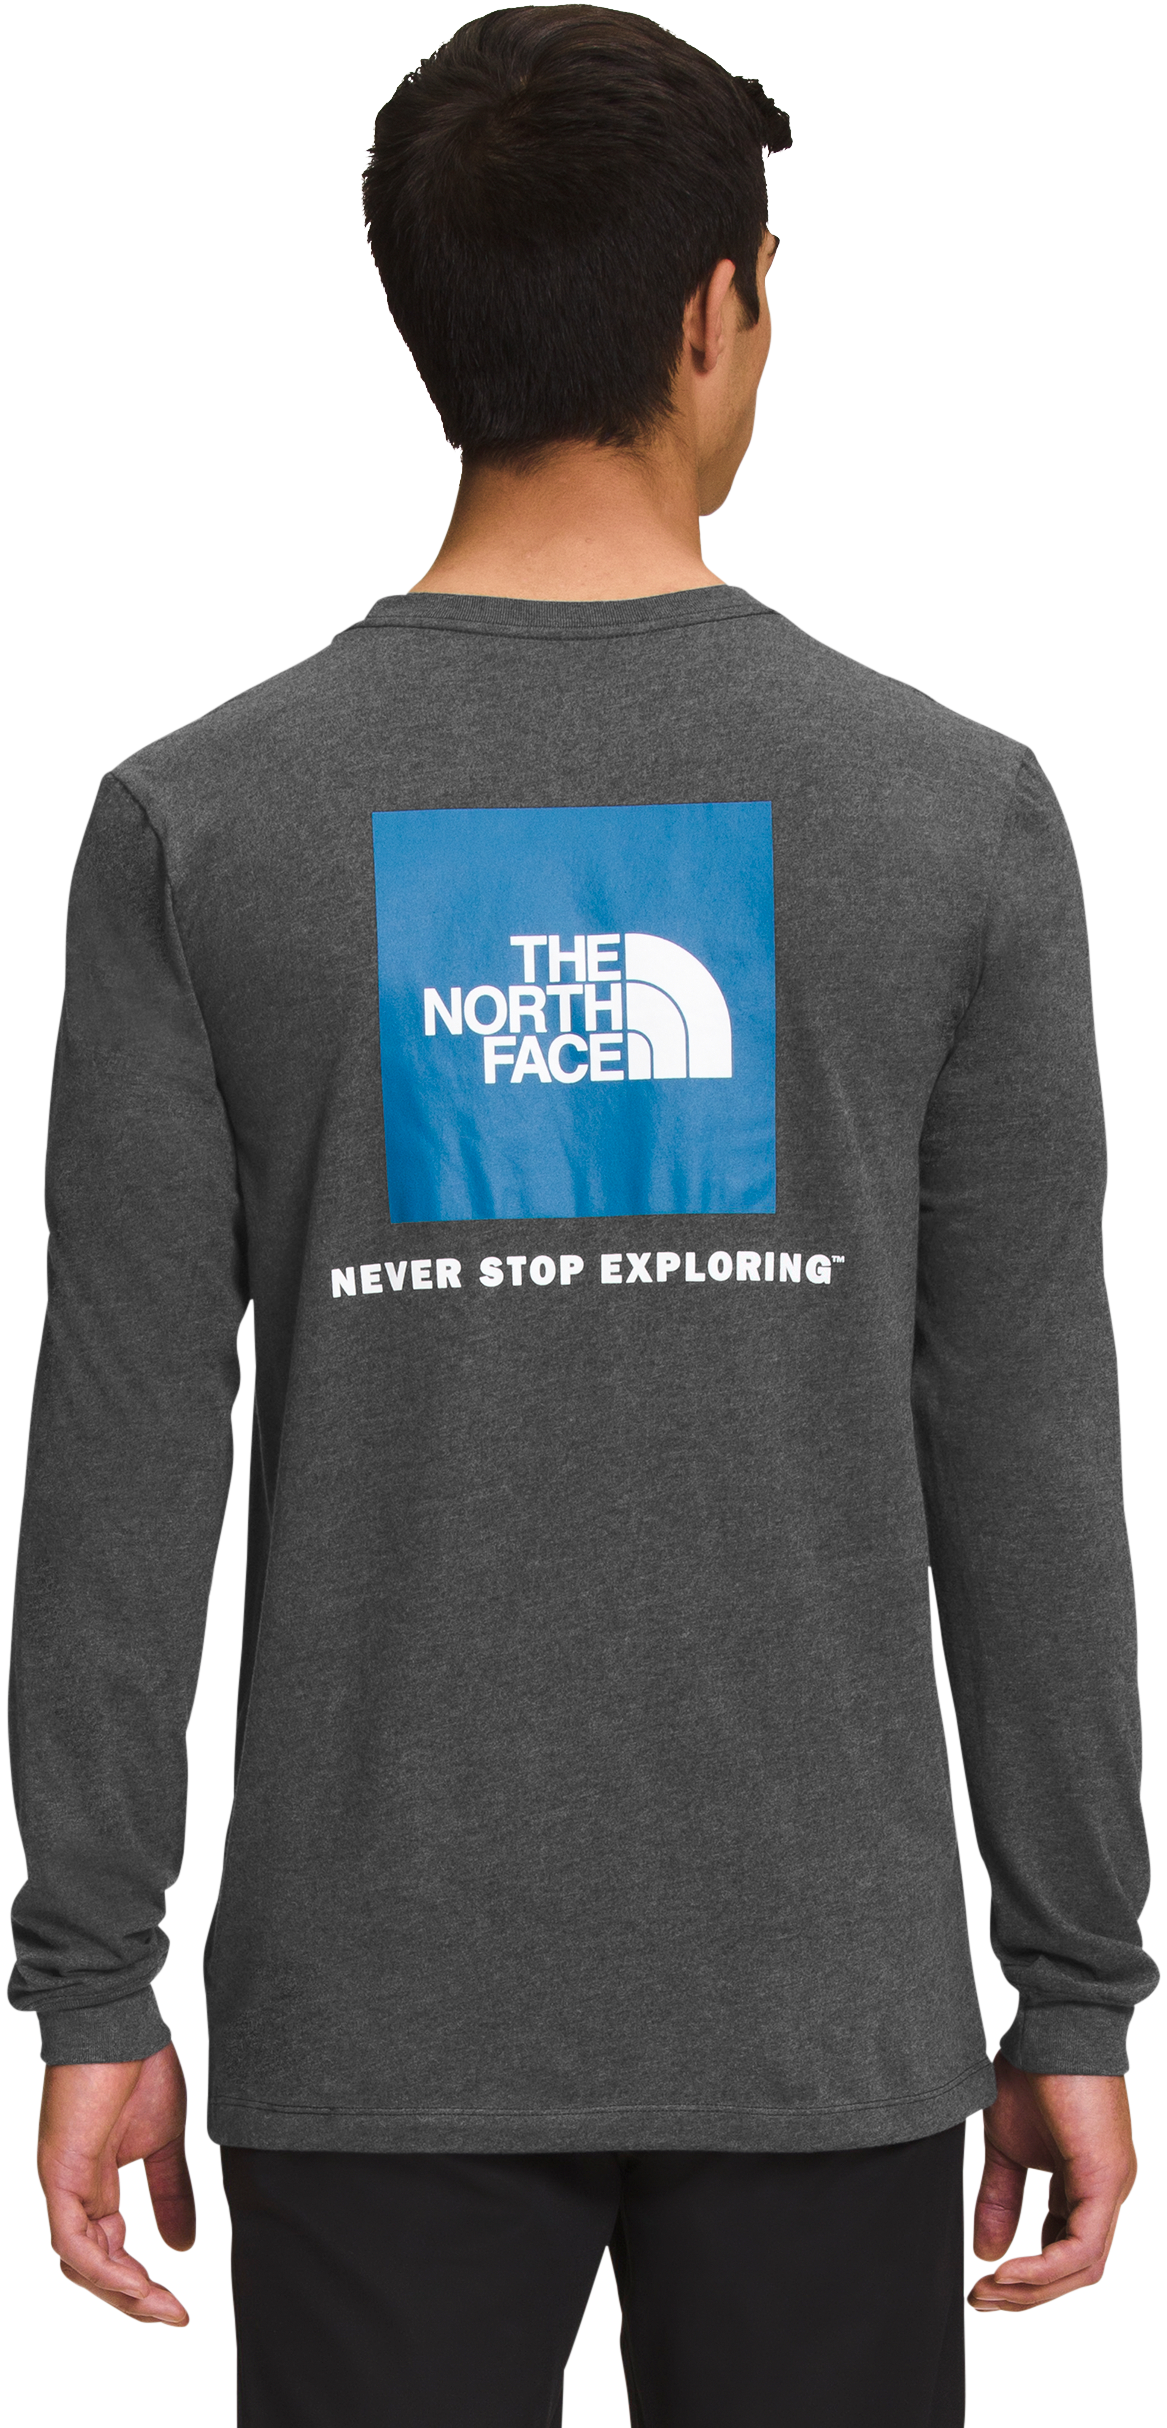 The North Face Box NSE Long-Sleeve Shirt for Men - TNF Dark Grey Heather/Banff Blue - S